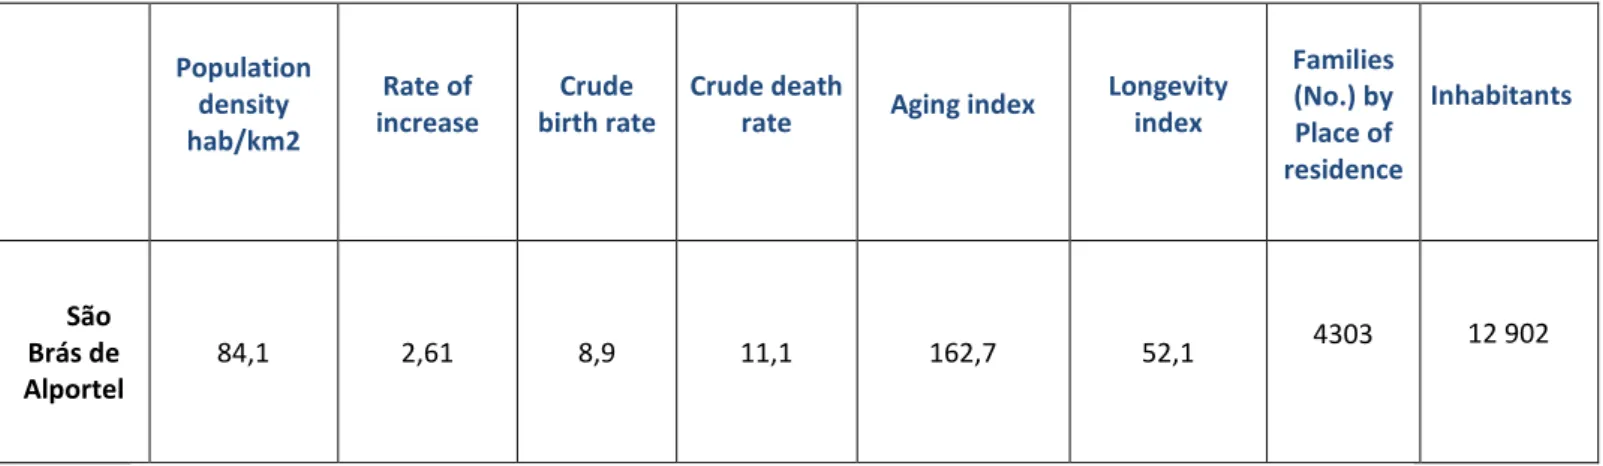 Table 1- Demographic indicators of São Brás de Alportel 